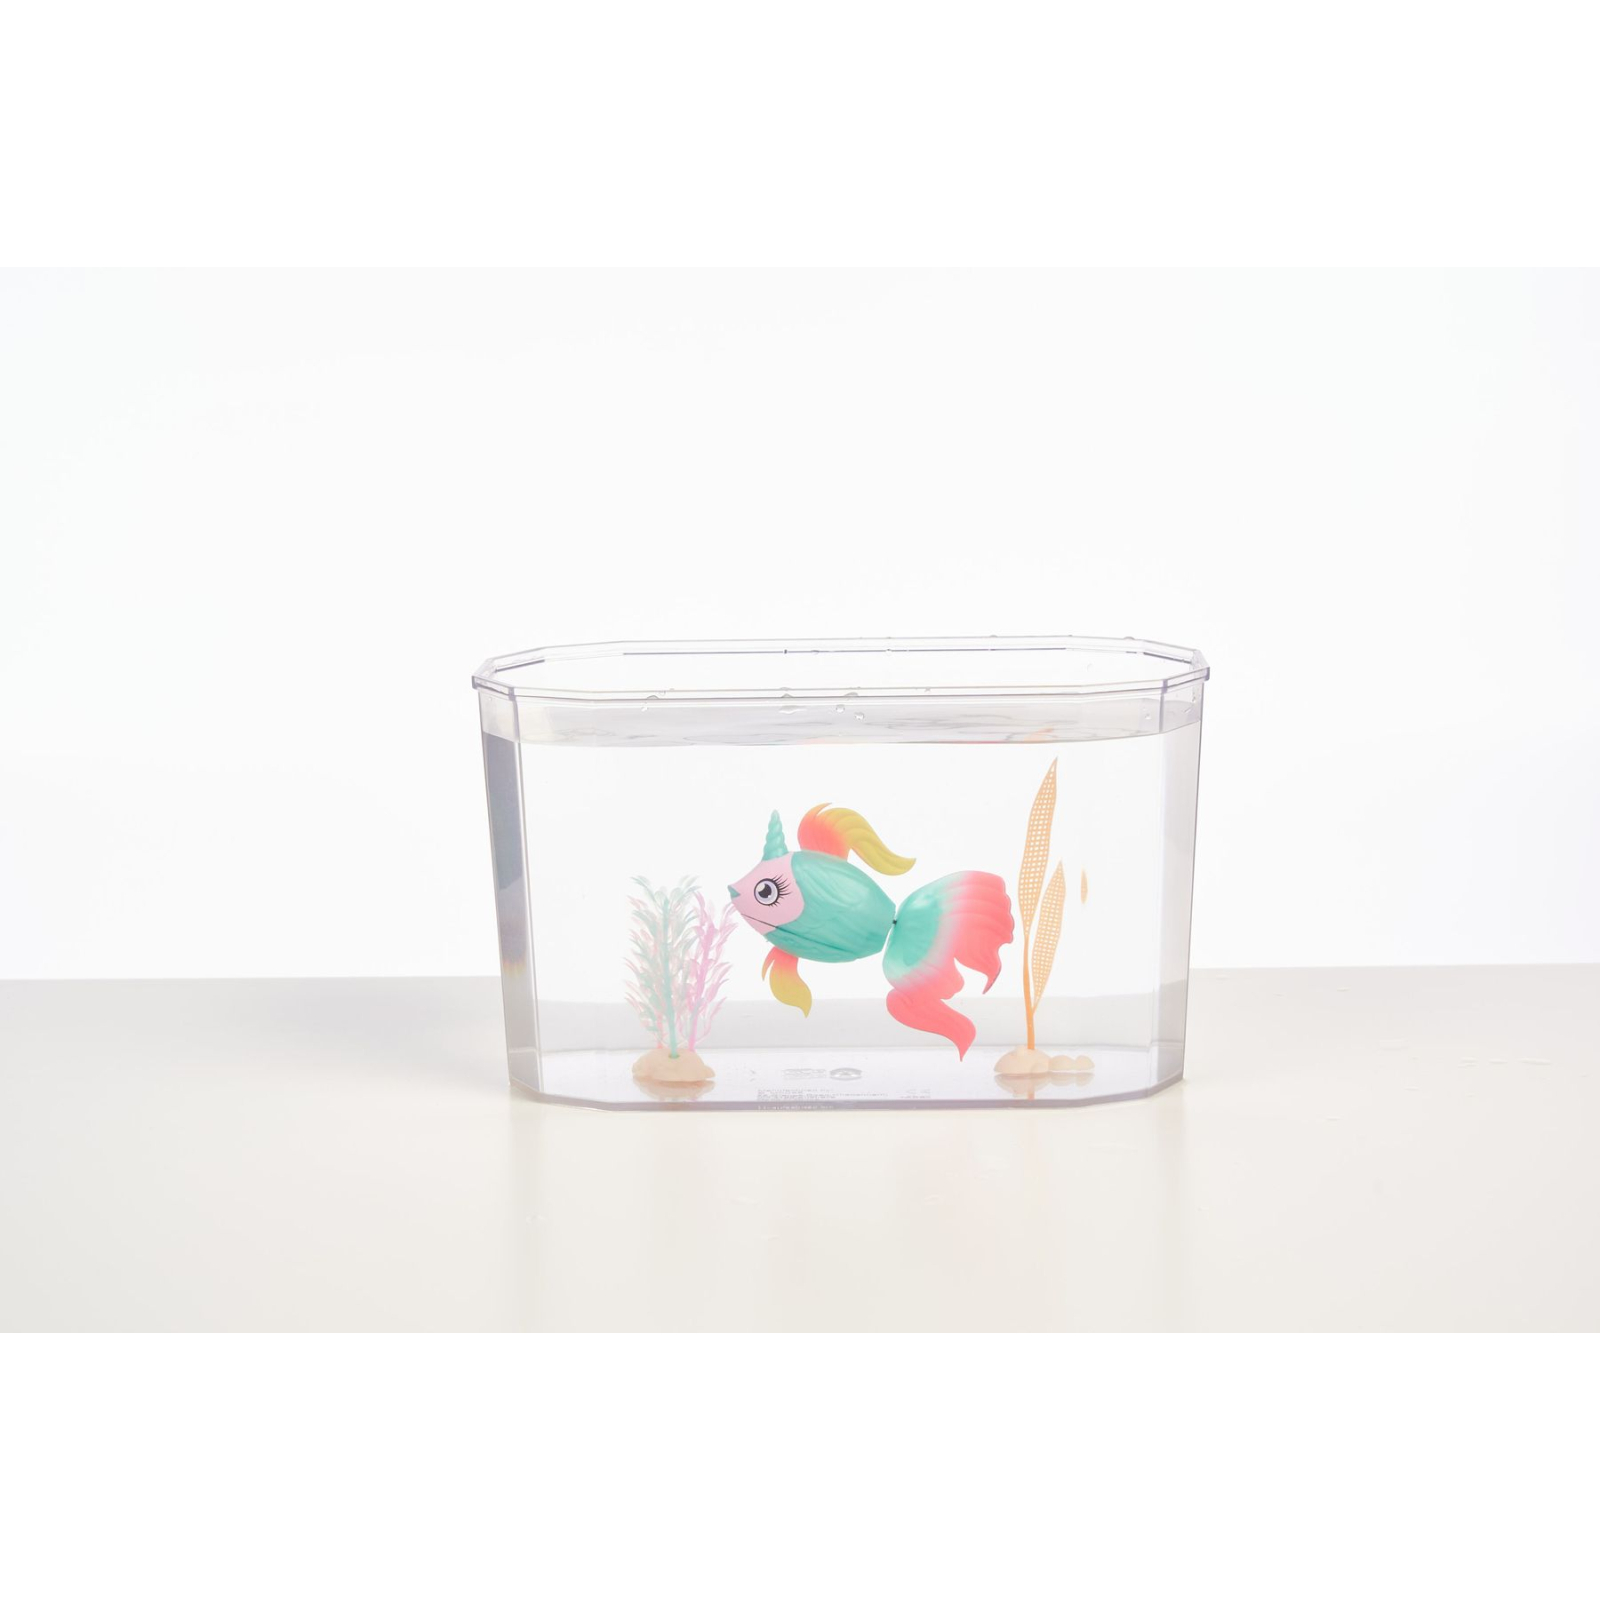 Интерактивная игрушка Moose рыбка S4 Фантазия в аквариуме (26408) изображение 6